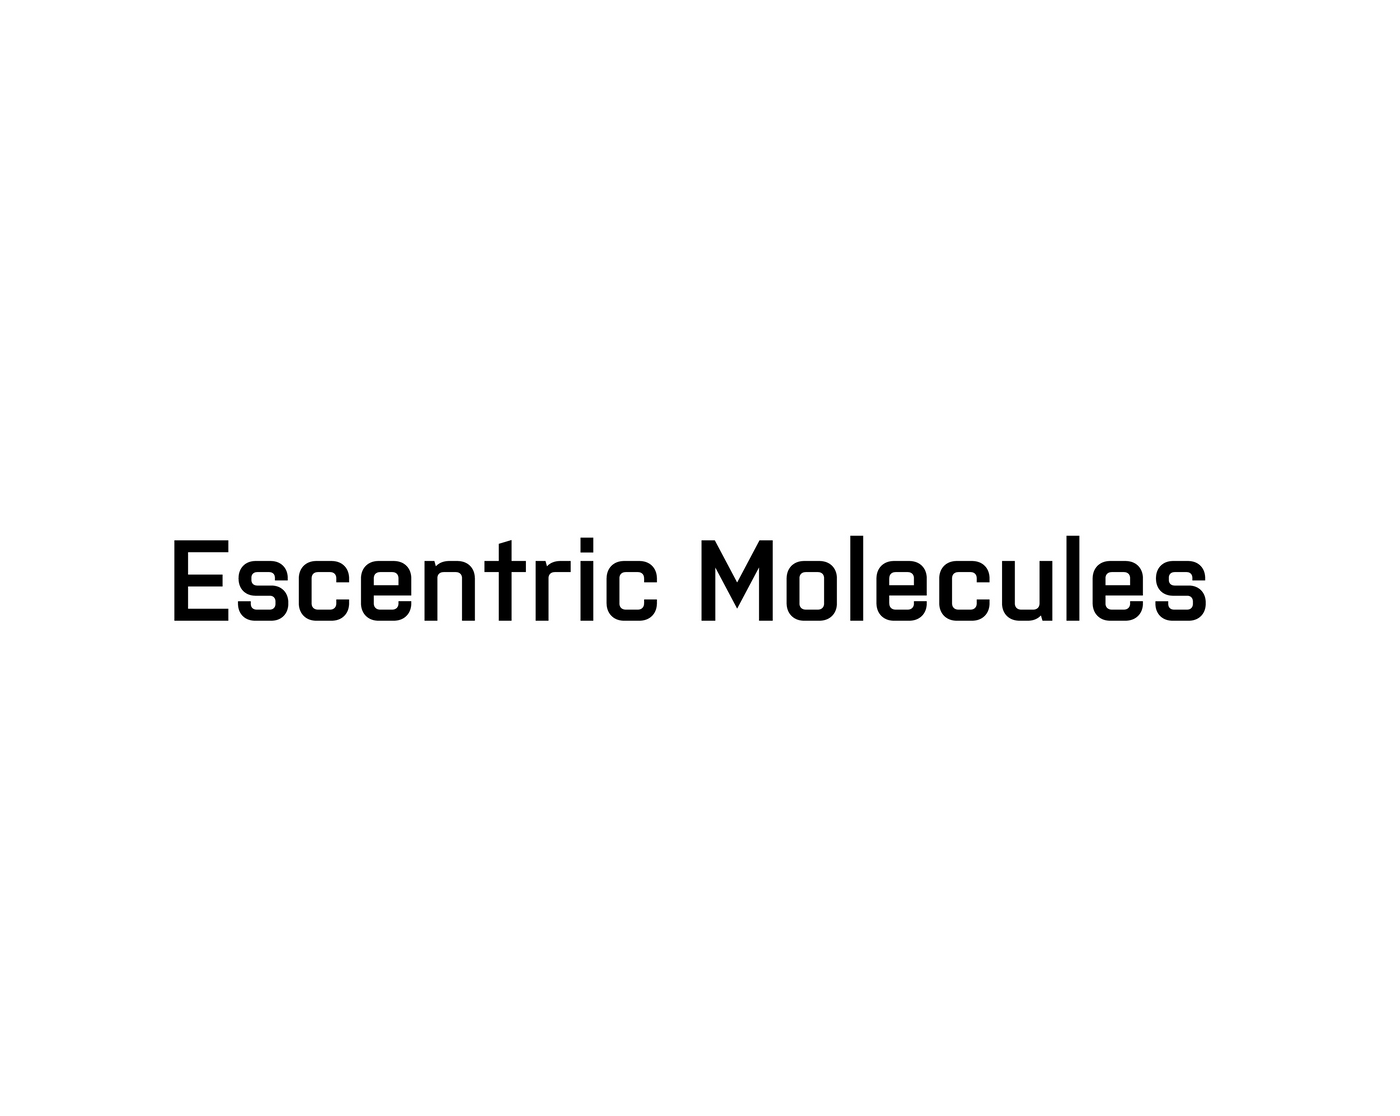 Men’s Escentric Molecules Fragrances